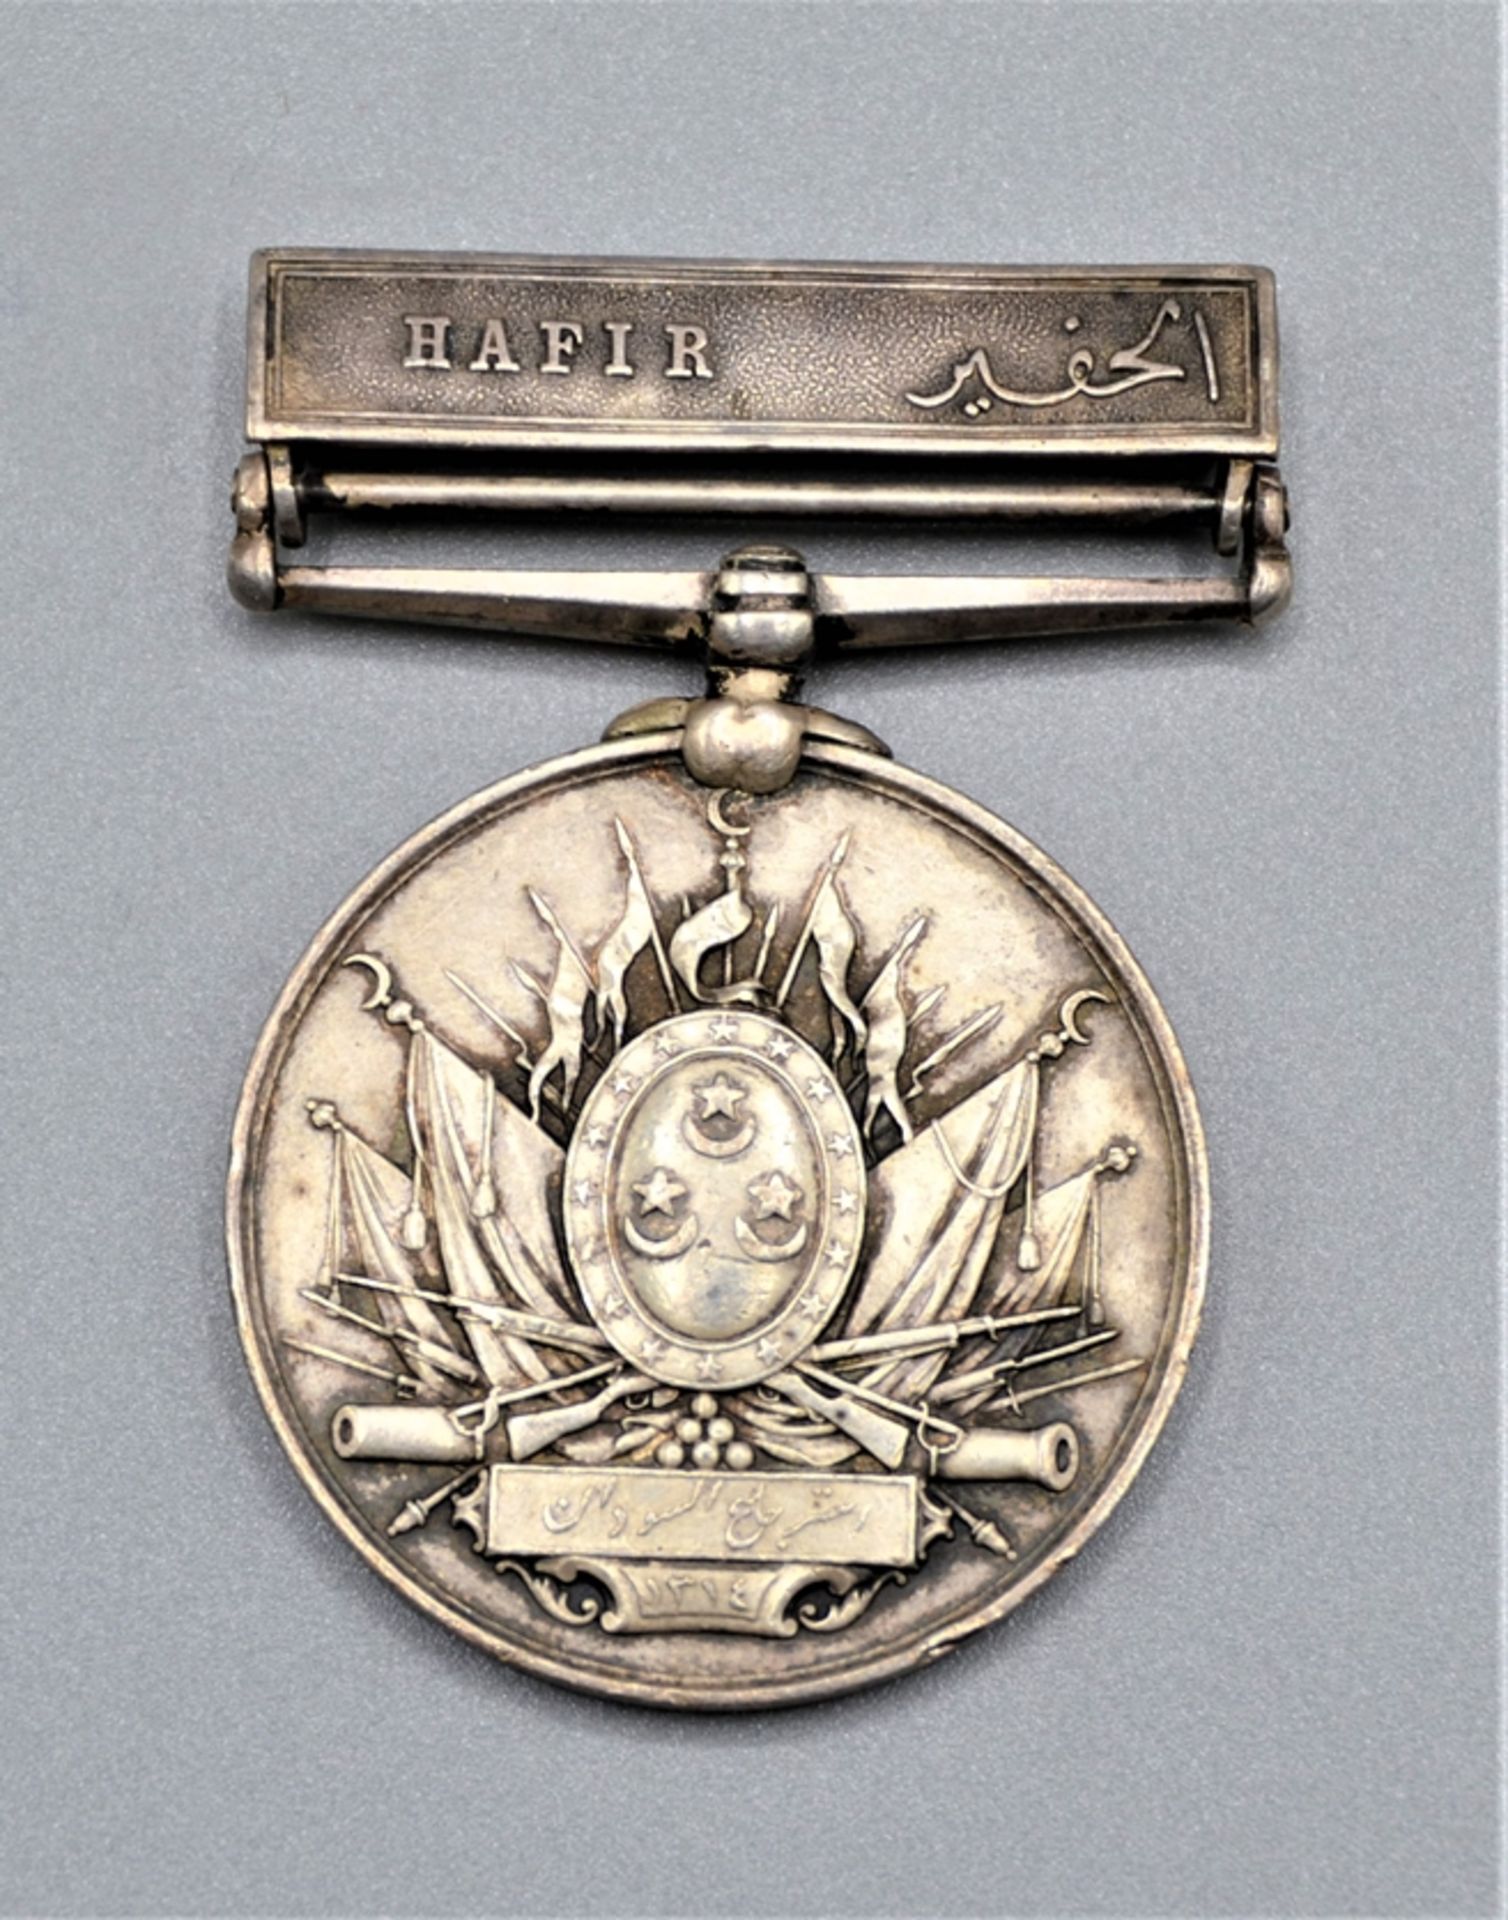 Khedive´s Sudan Medaille 1896 Orden mit Schließe Hafir Silber, Ø 38mm 47,4g